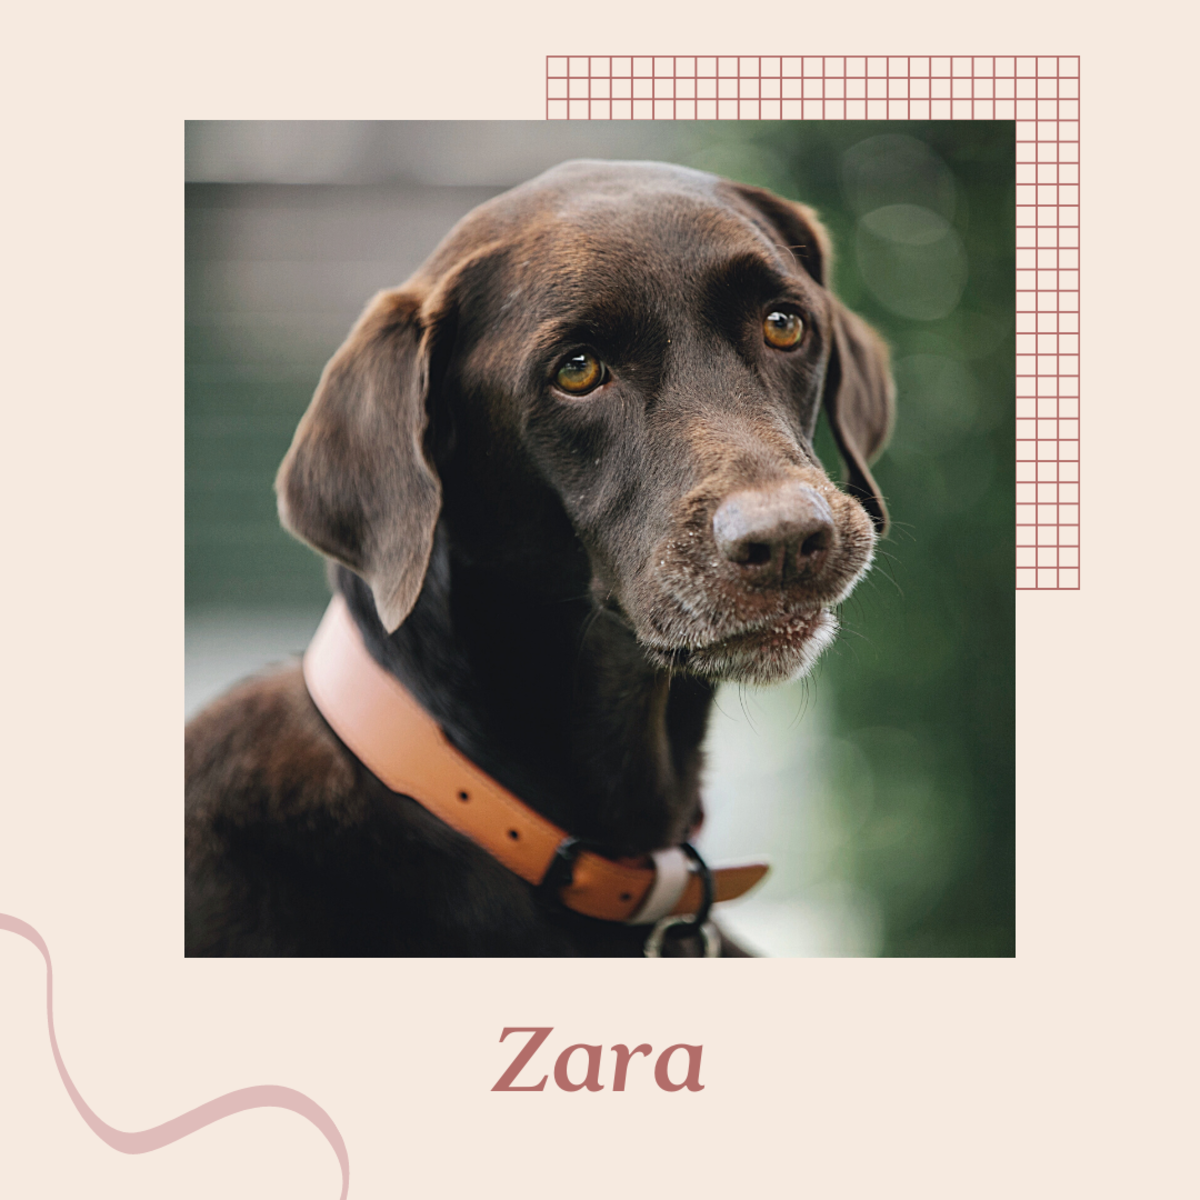 Zara is a great dog name! 